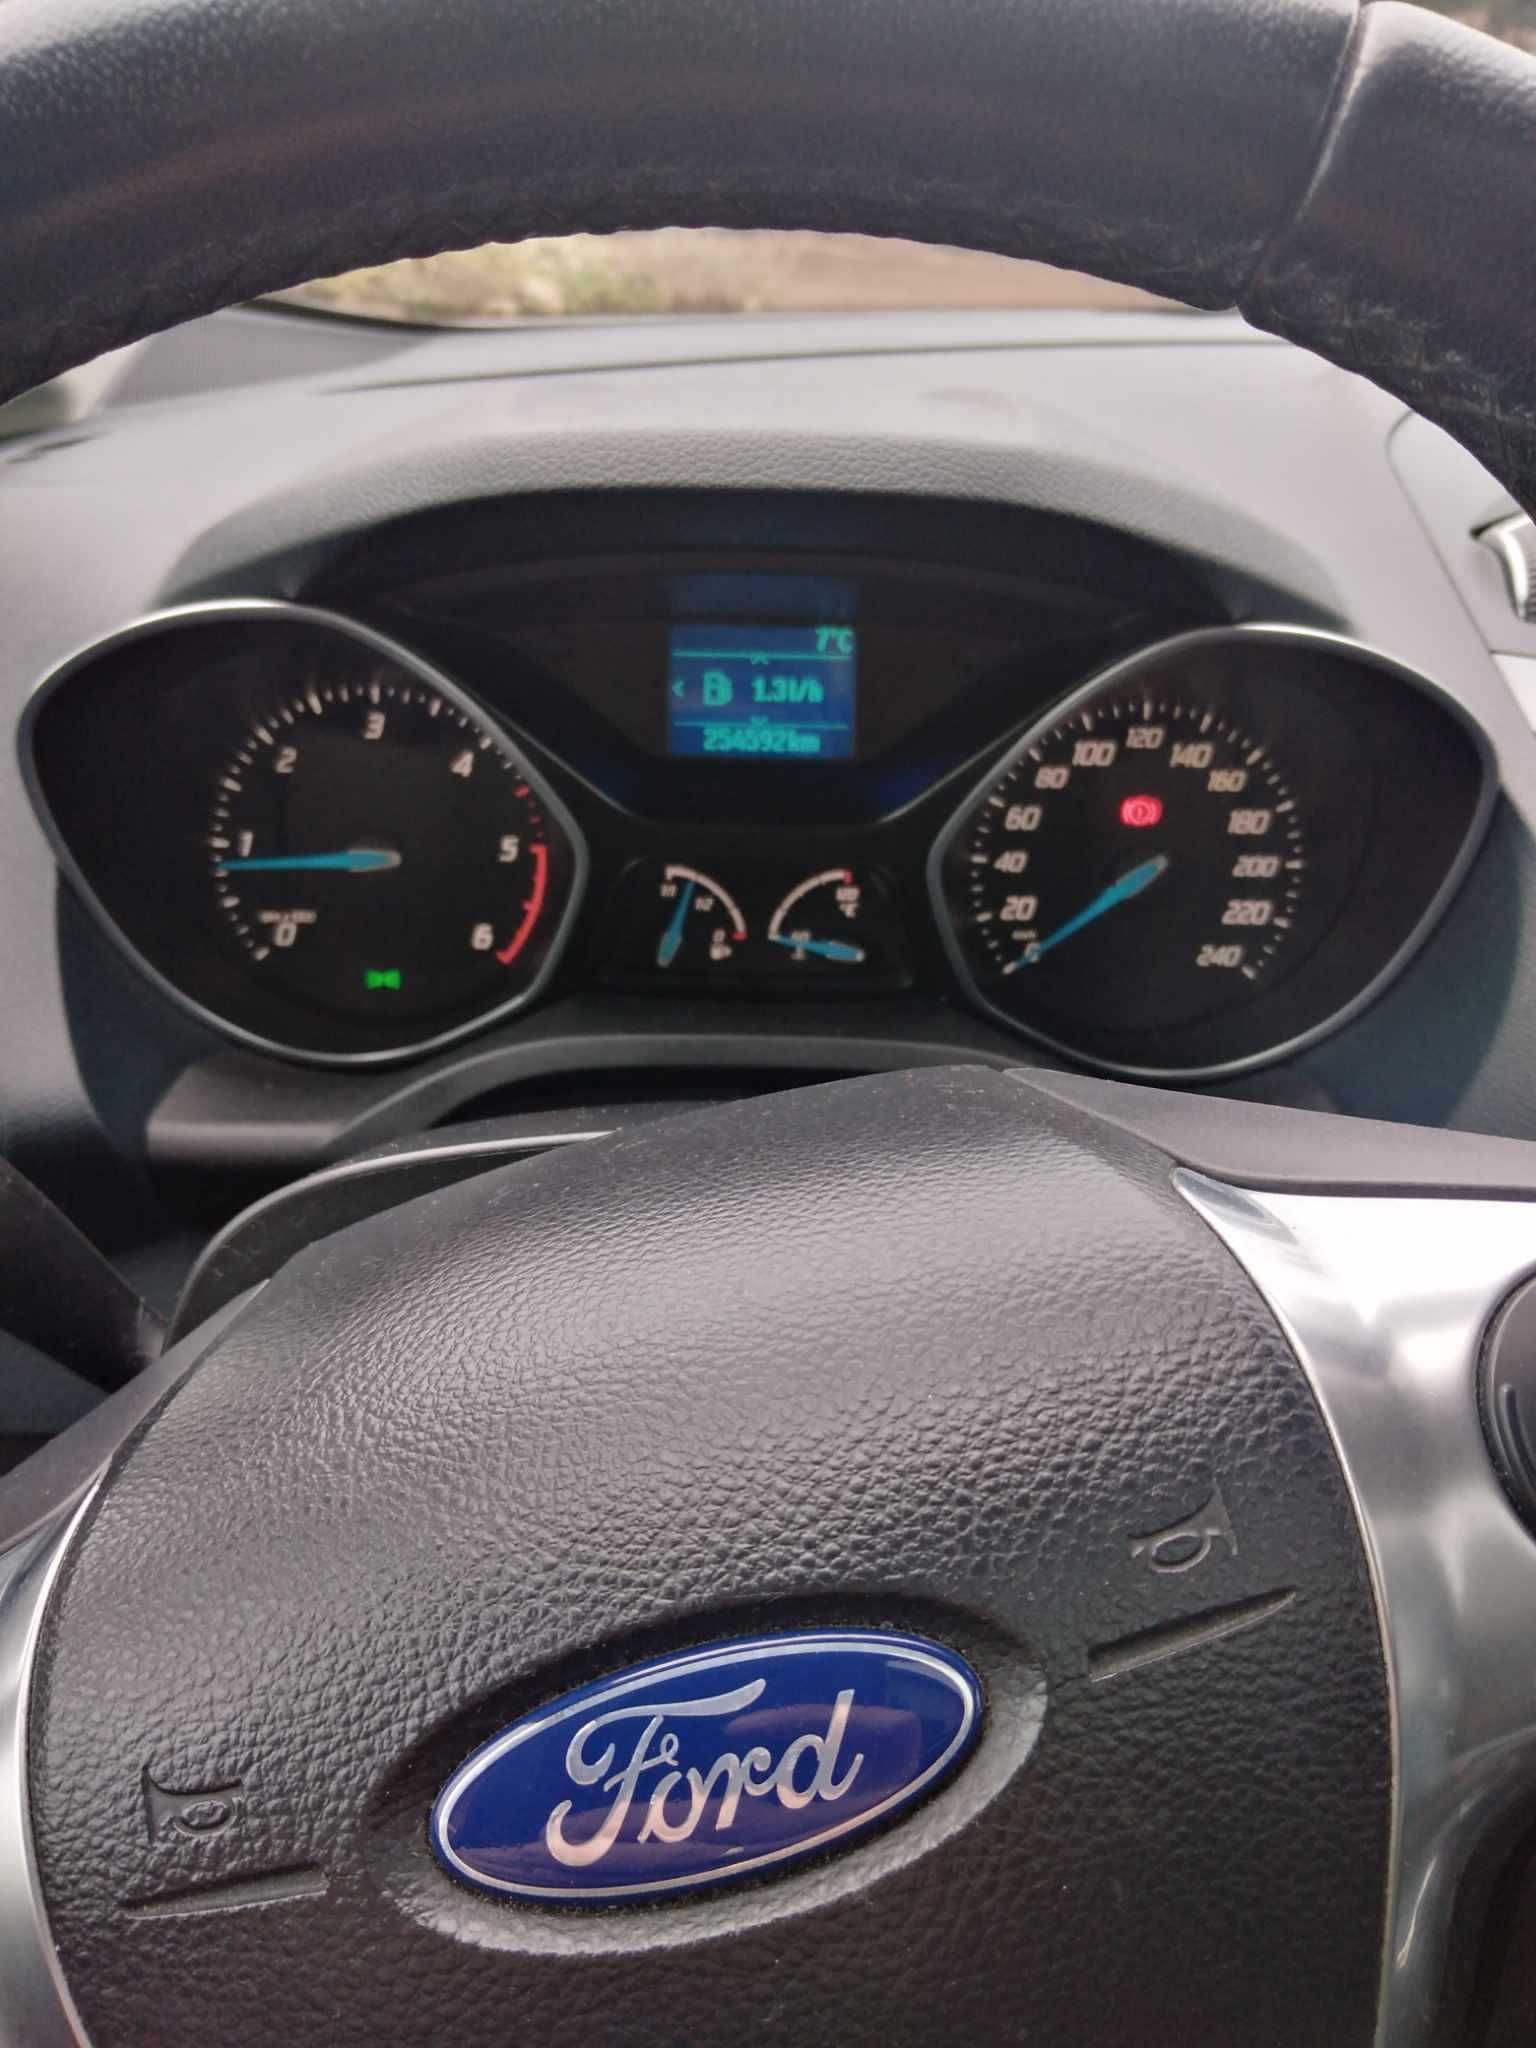 Ford C-Max 2012r. 1.6 Tdci 115km